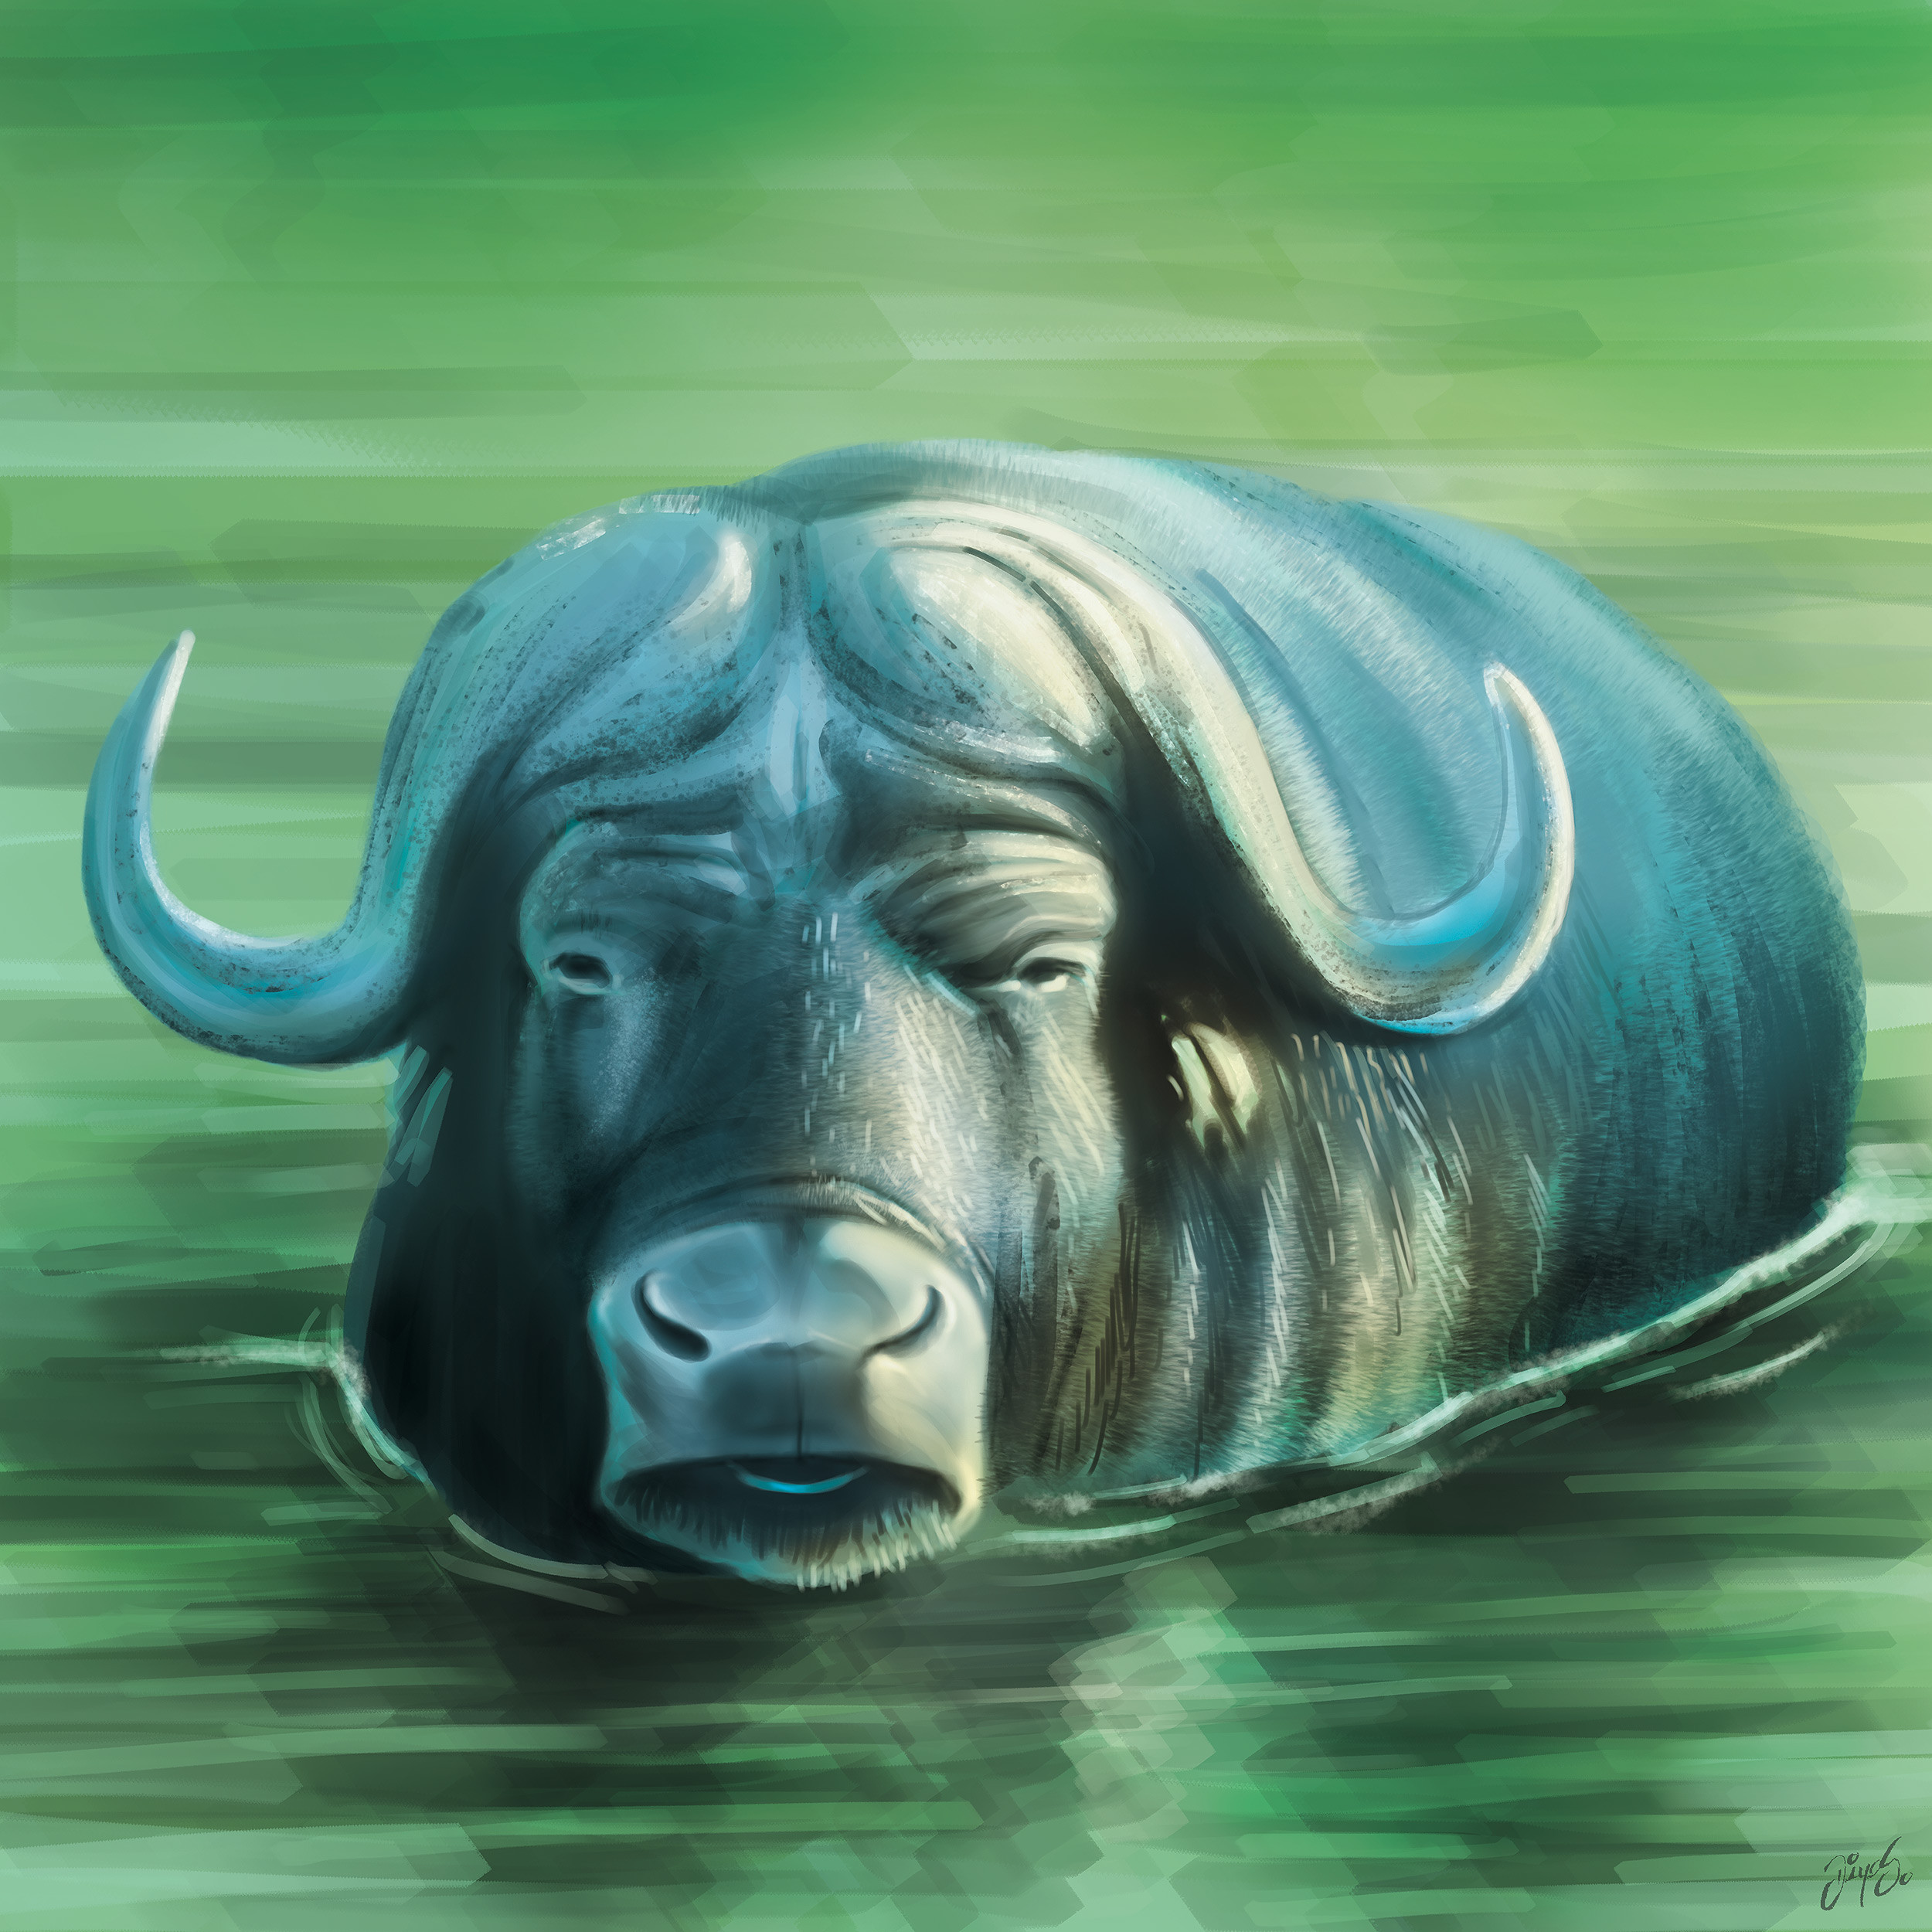 Tile illustration - Water buffalo